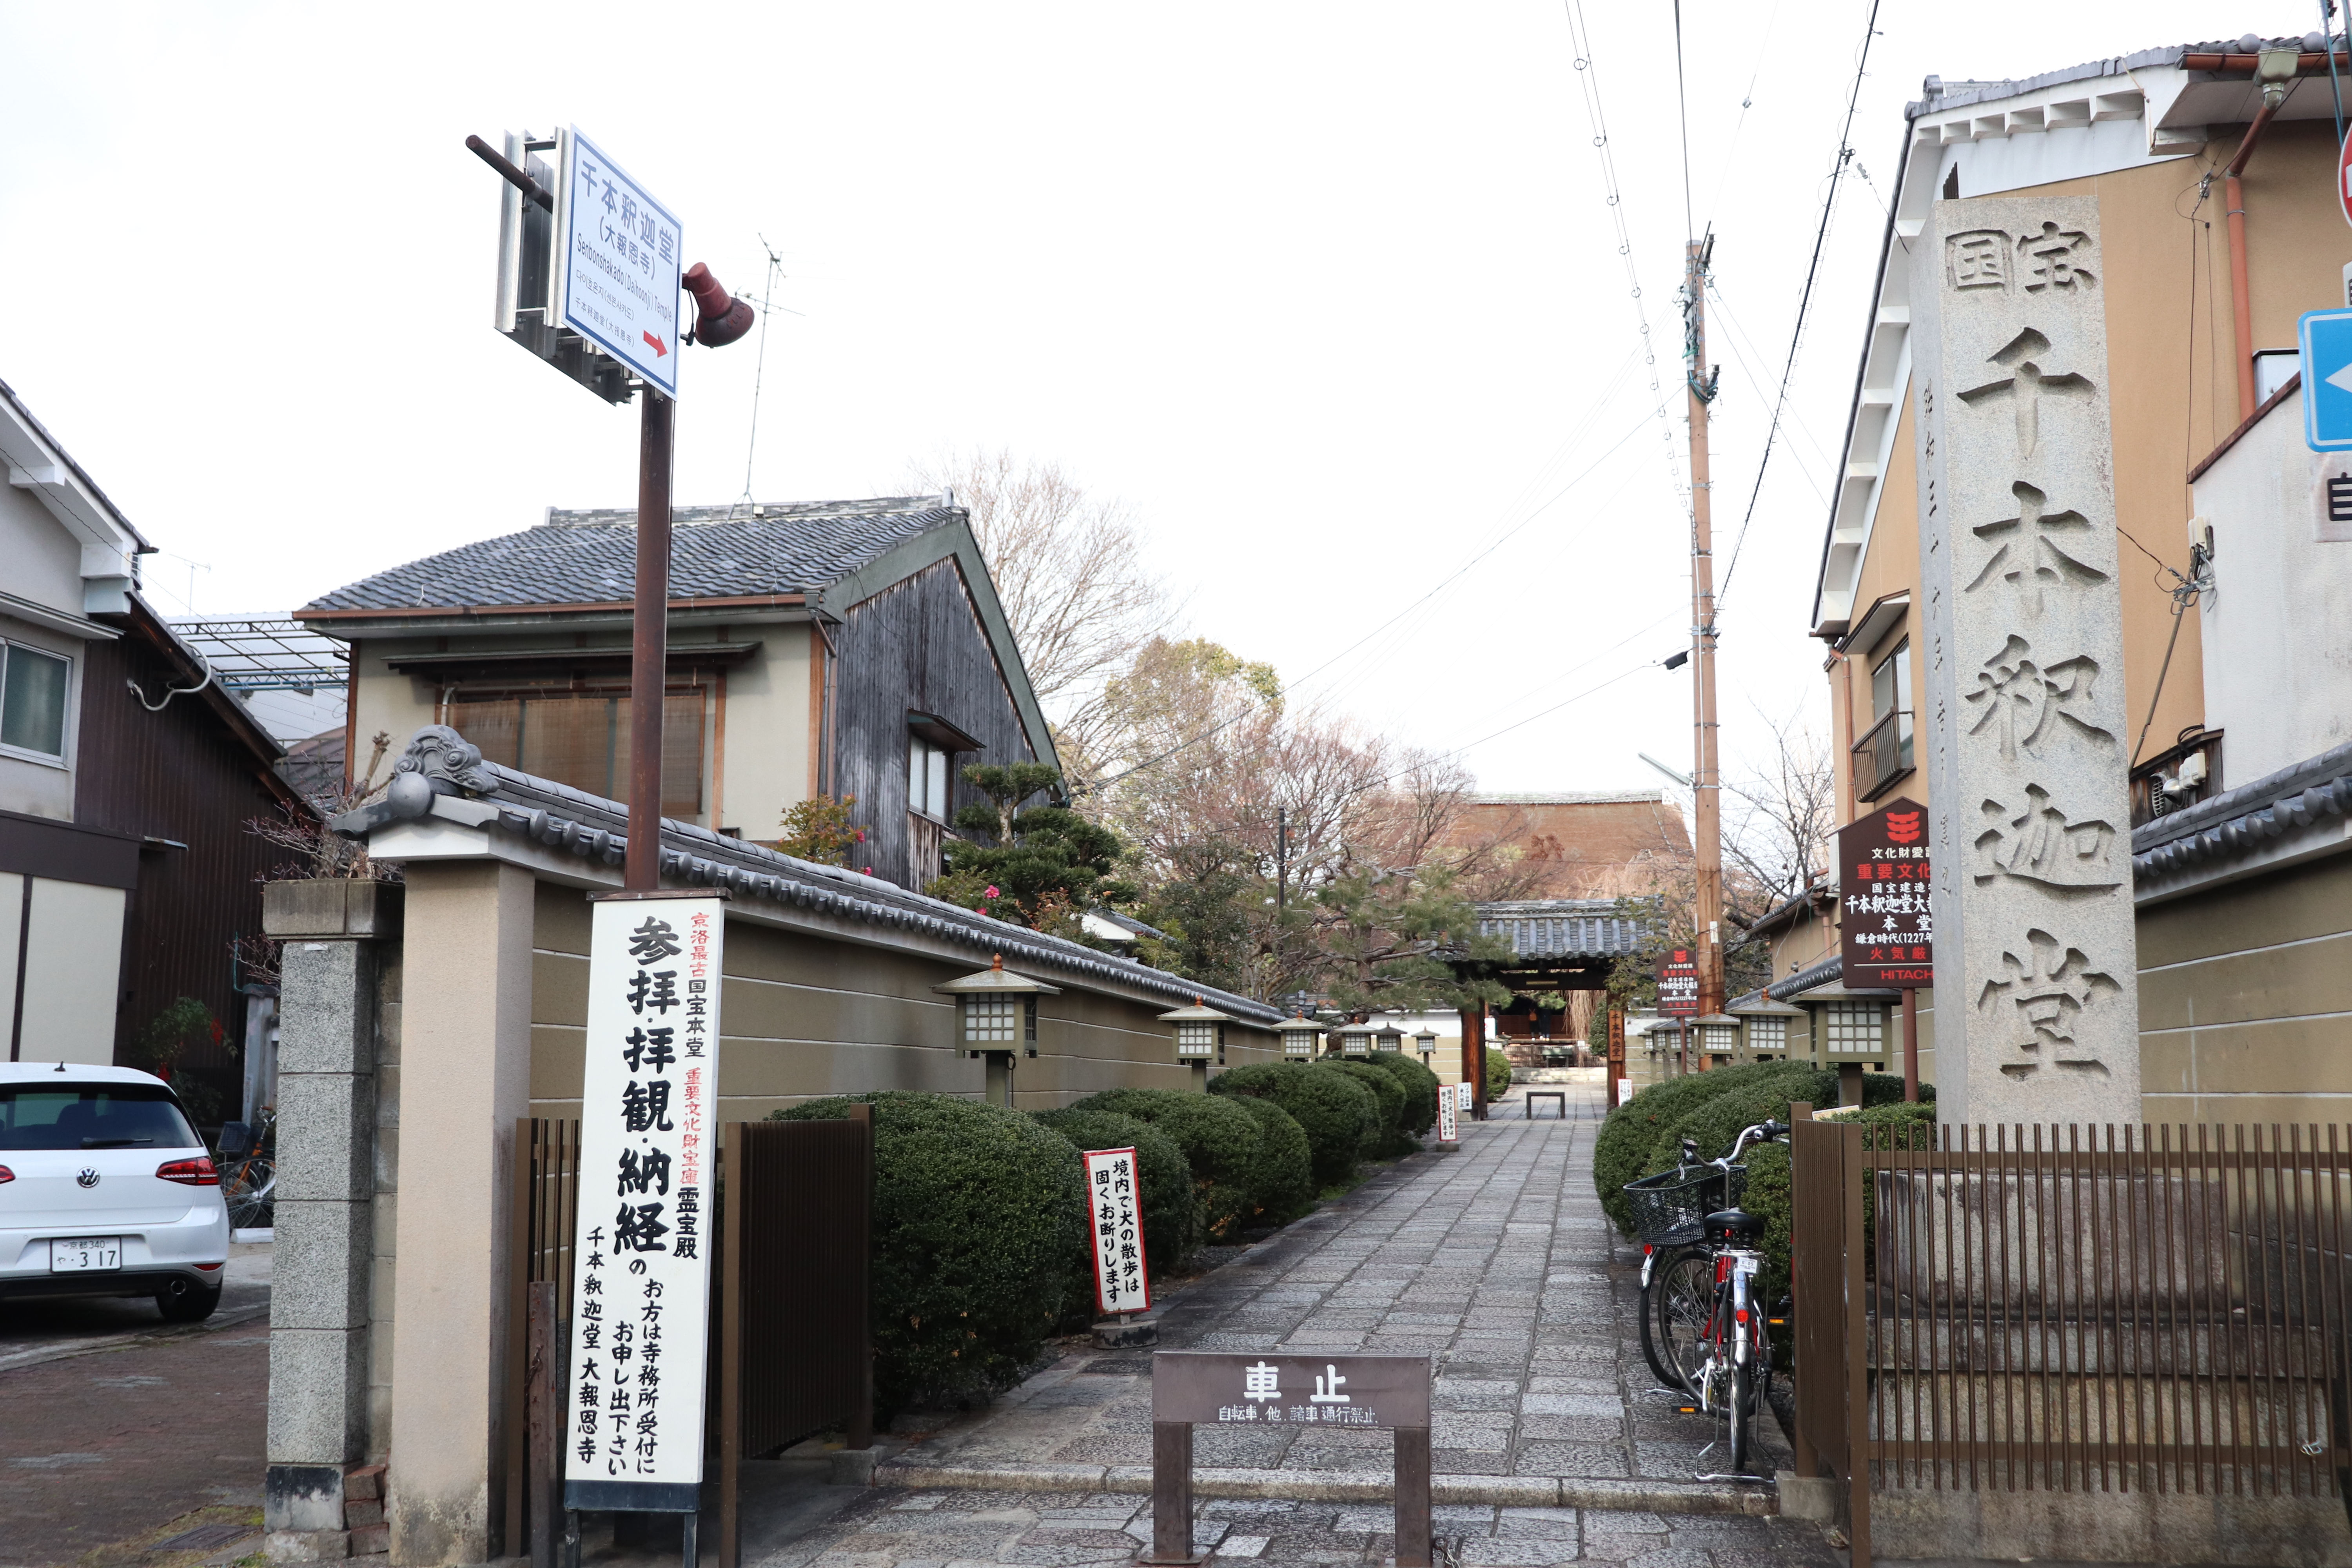 Entrance of Senbon Shakado in Kyoto Japan